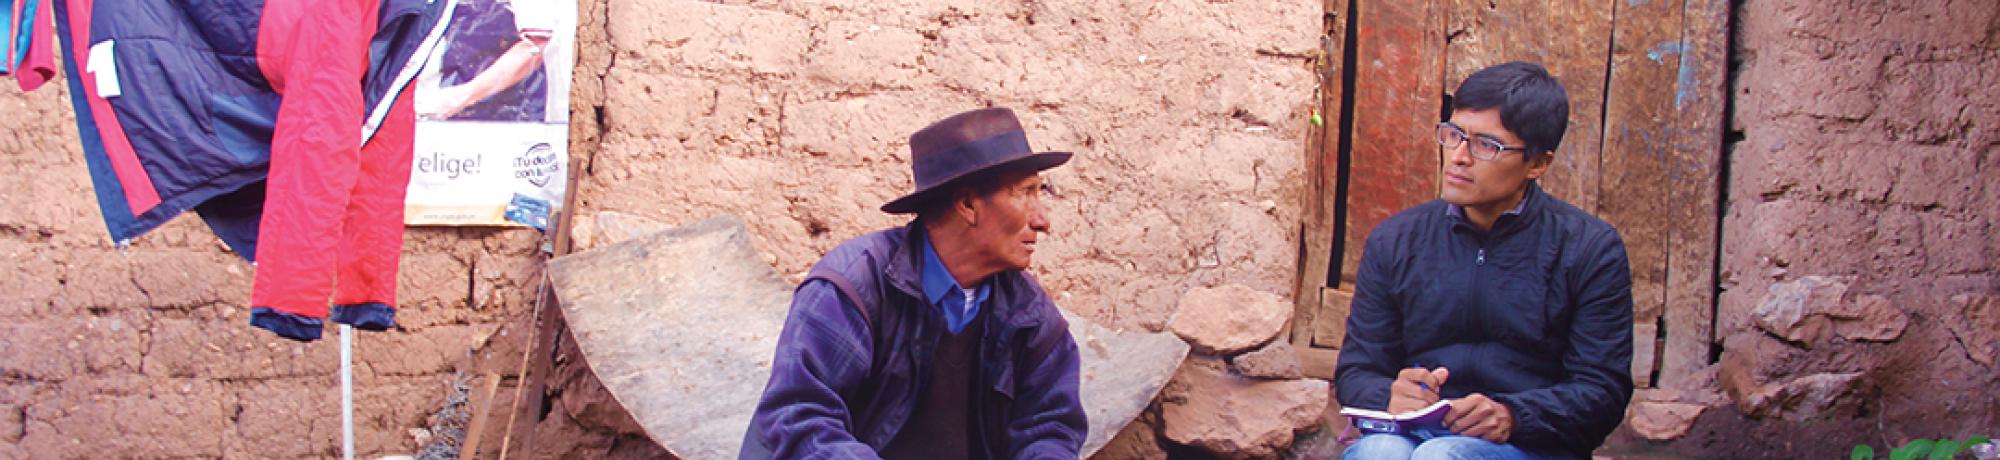 UC Davis graduate student interviewing a villager in Peru